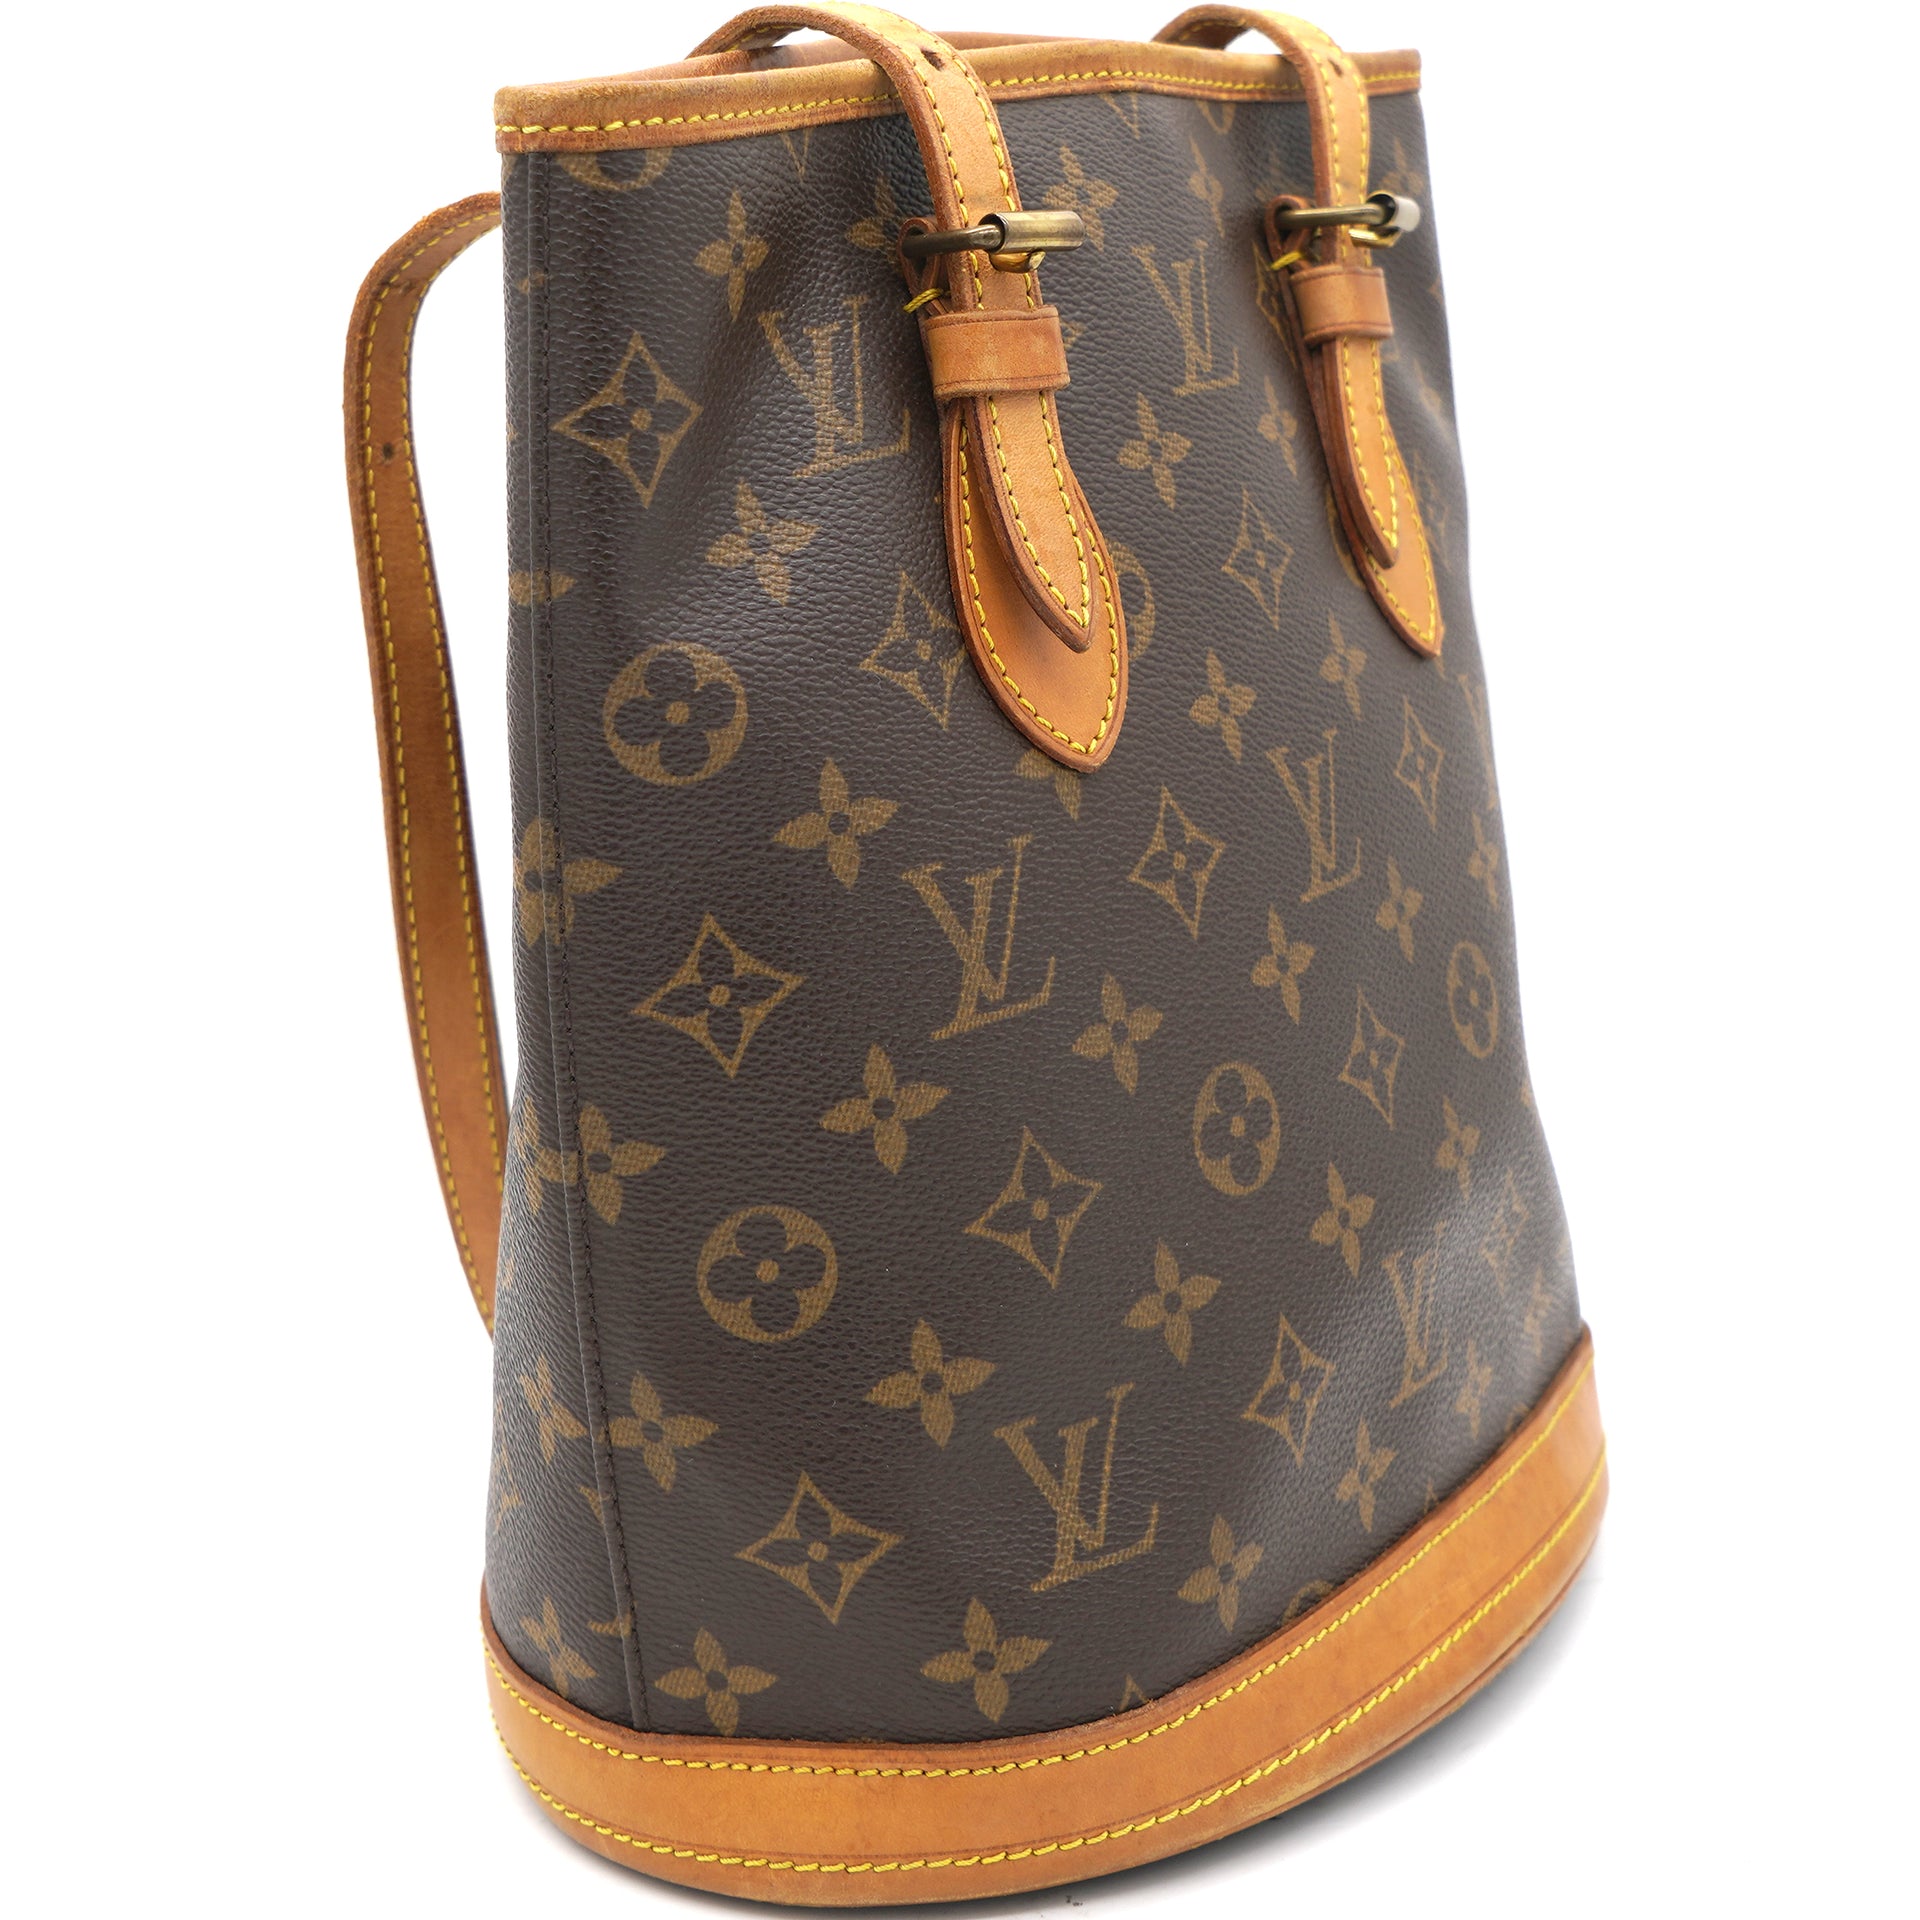 LOUIS VUITTON Louis Vuitton Bucket PM Shoulder Bag Handbag